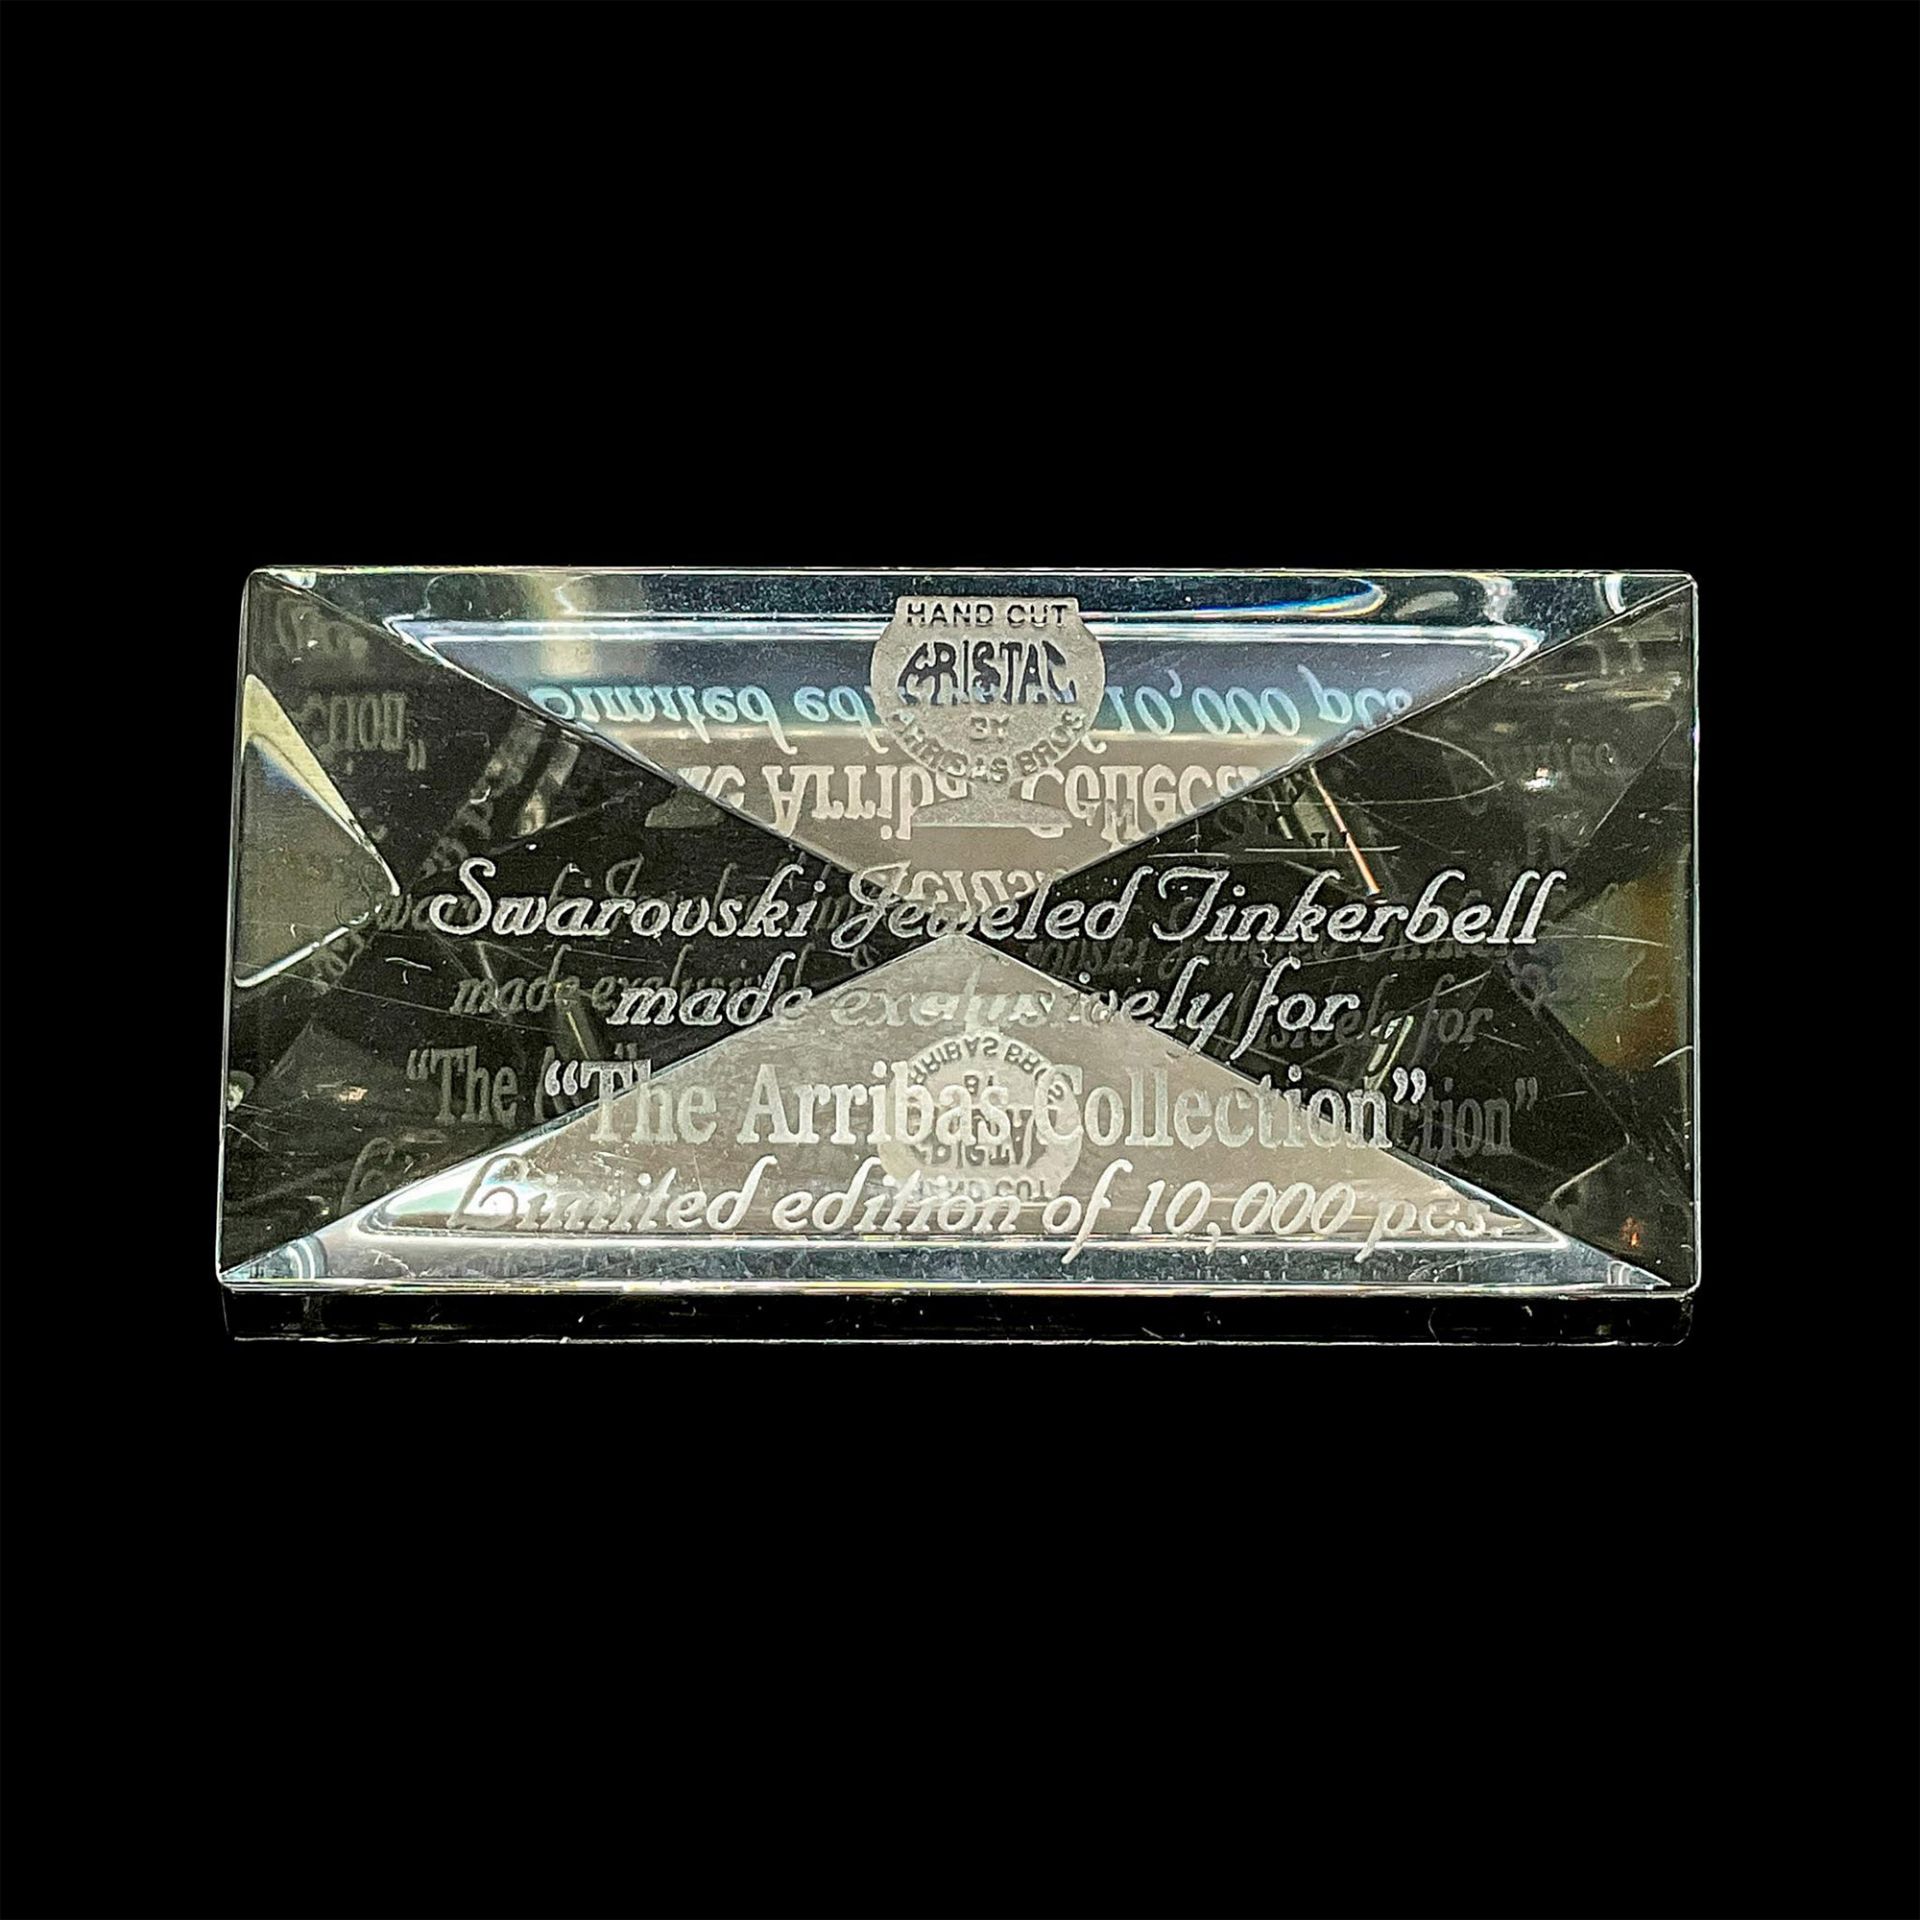 Swarovski Jeweled Tinkerbell and Display Plaque - Image 2 of 6